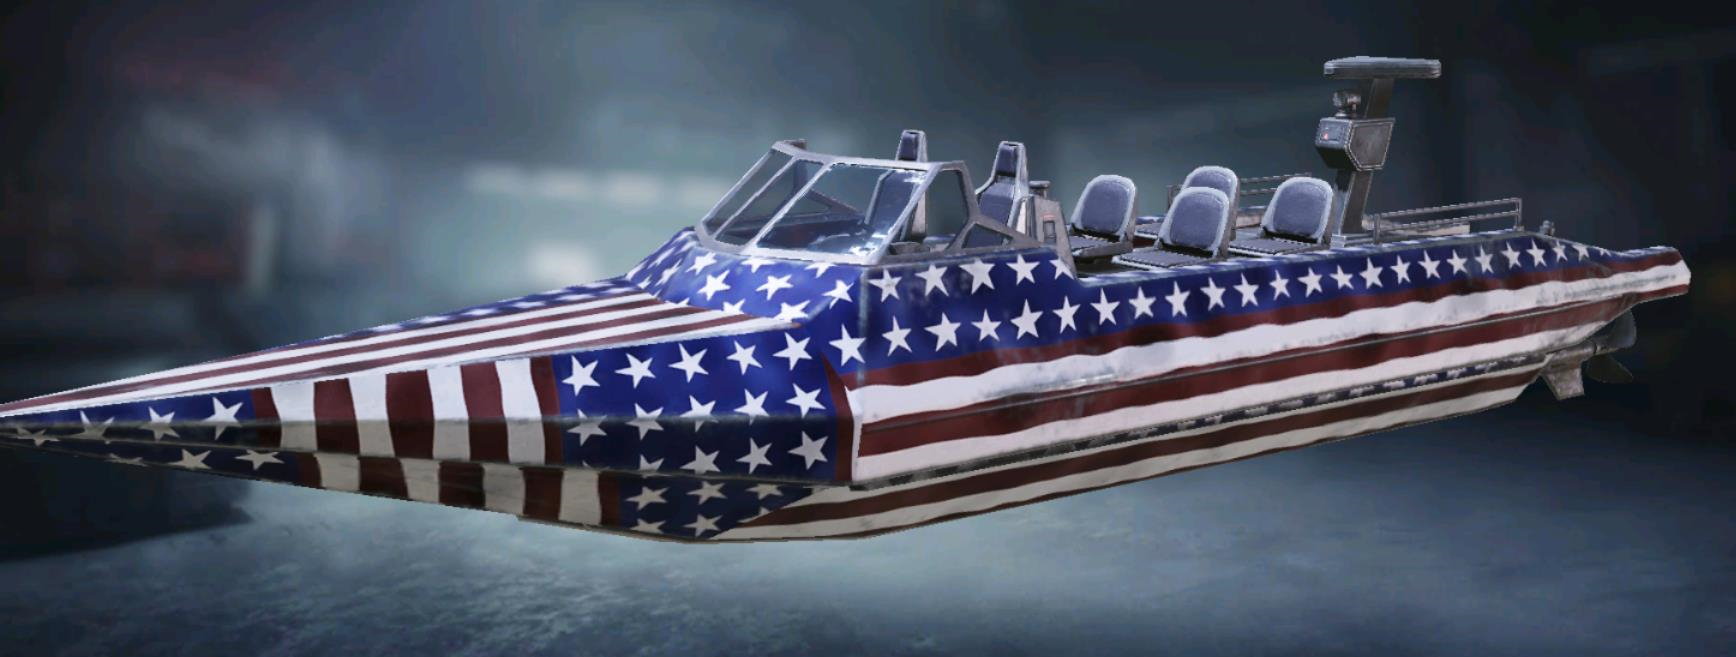 Boat Commonwealth, Uncommon camo in Call of Duty Mobile